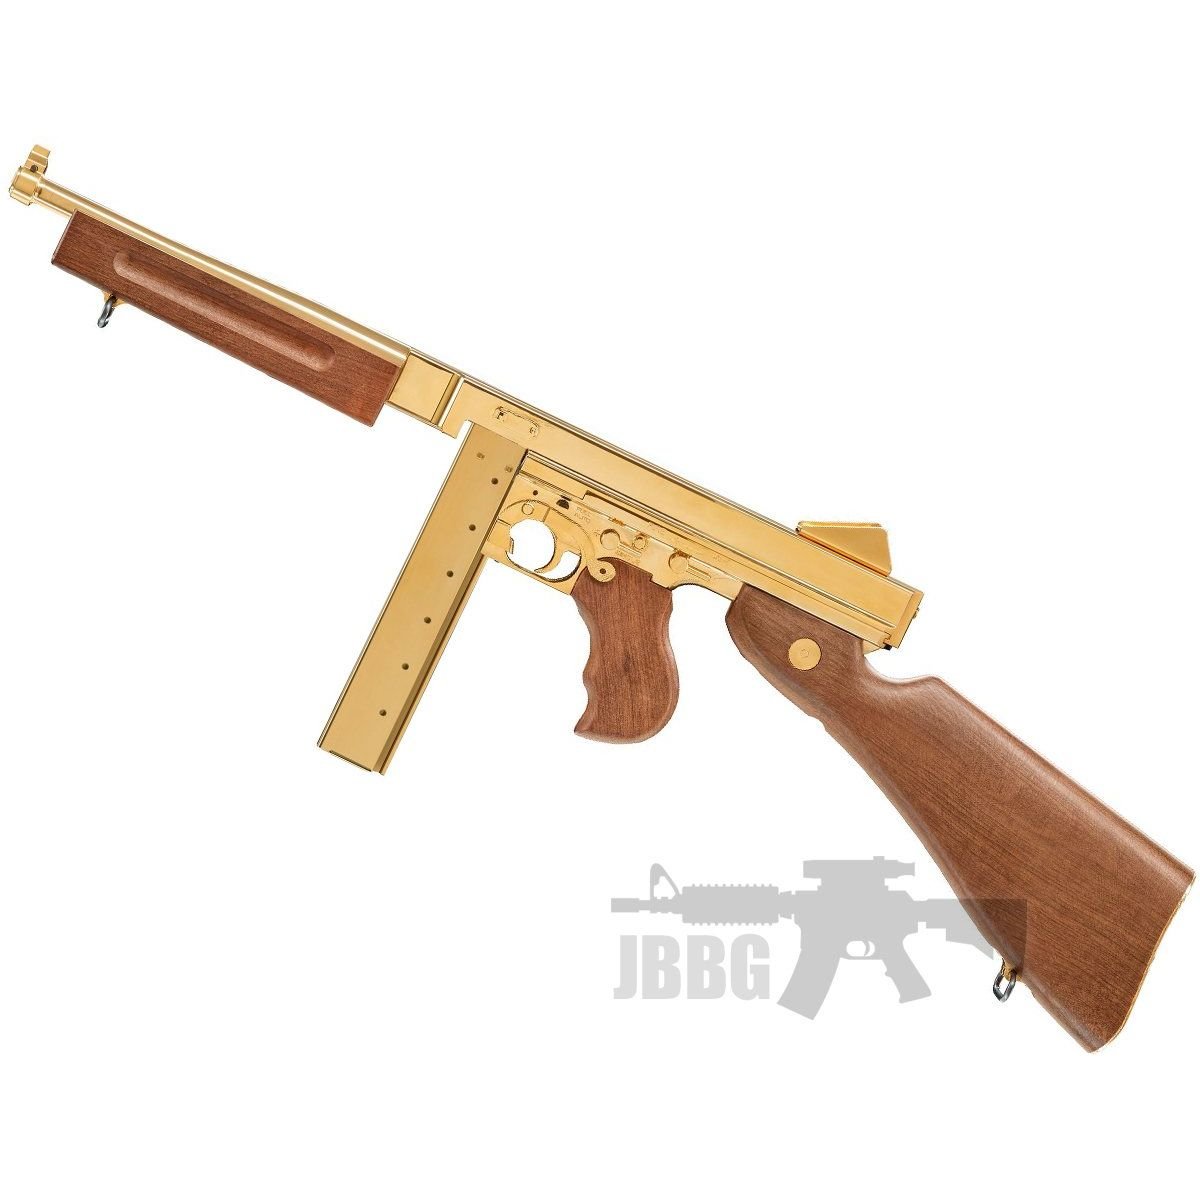 Umarex Legends M1a1 Legendary Gold Co2 Submachine Gun